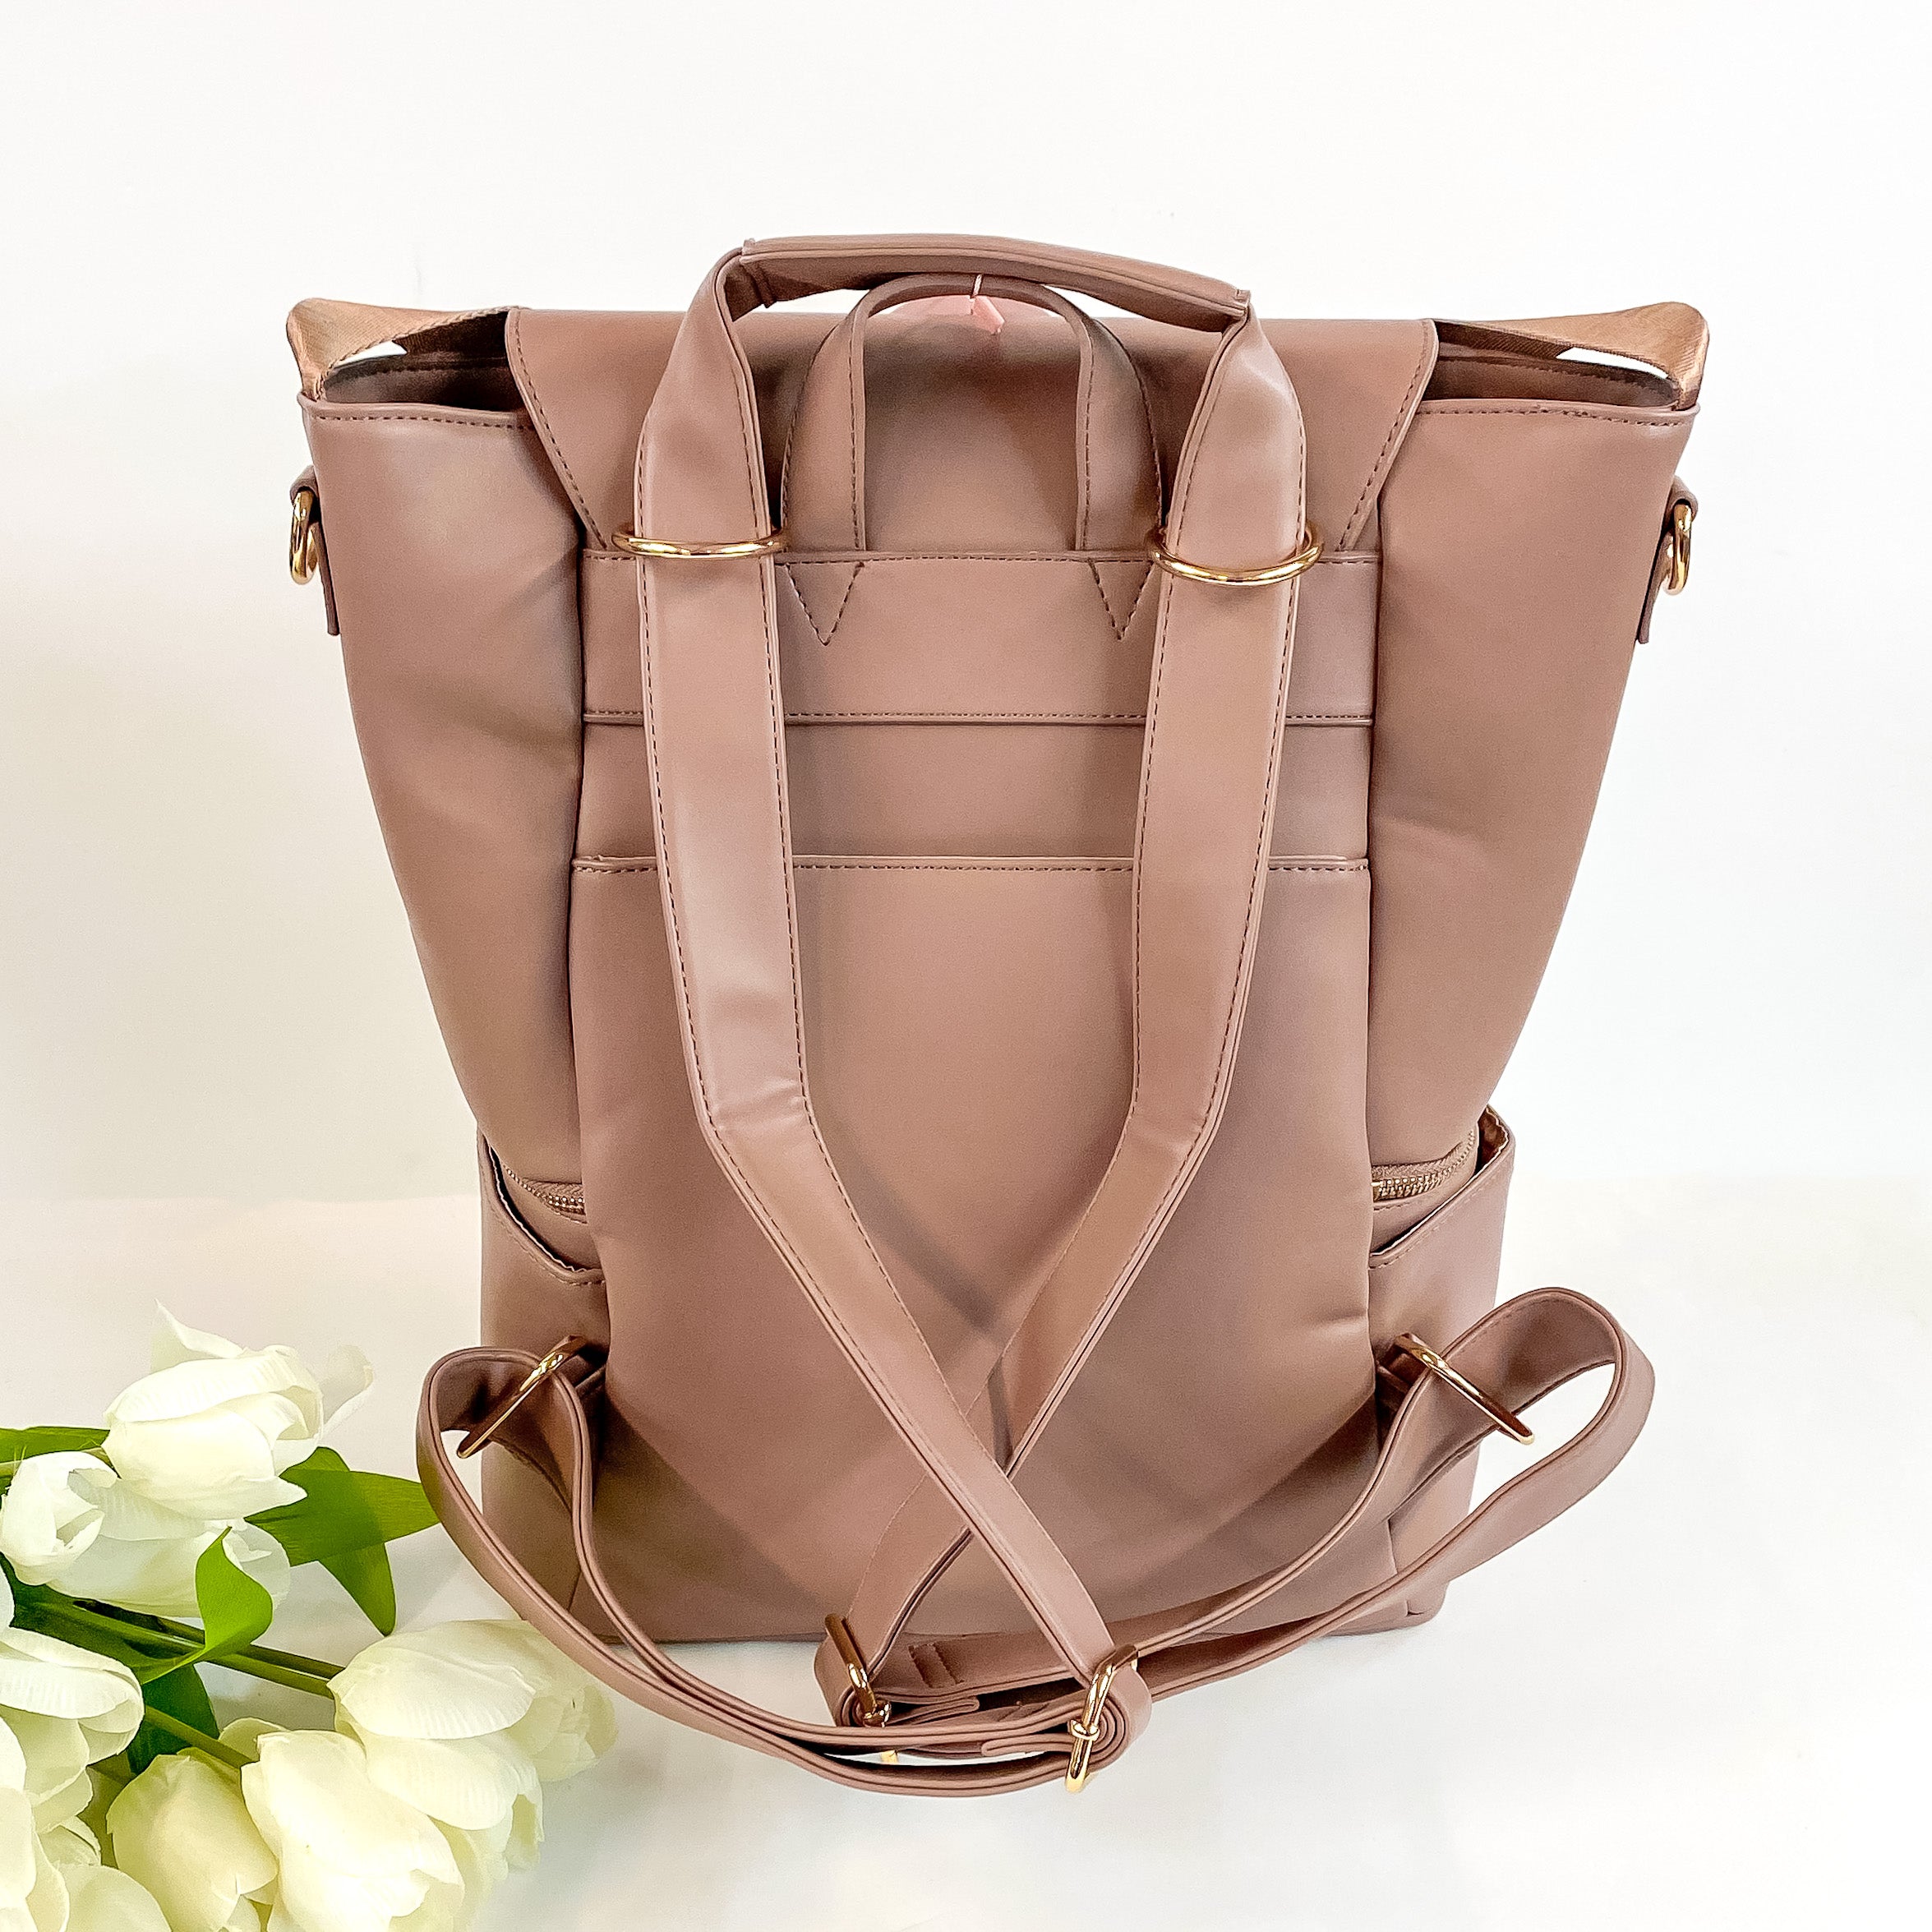 Hollis | Diaper Bag in Mocha - Giddy Up Glamour Boutique